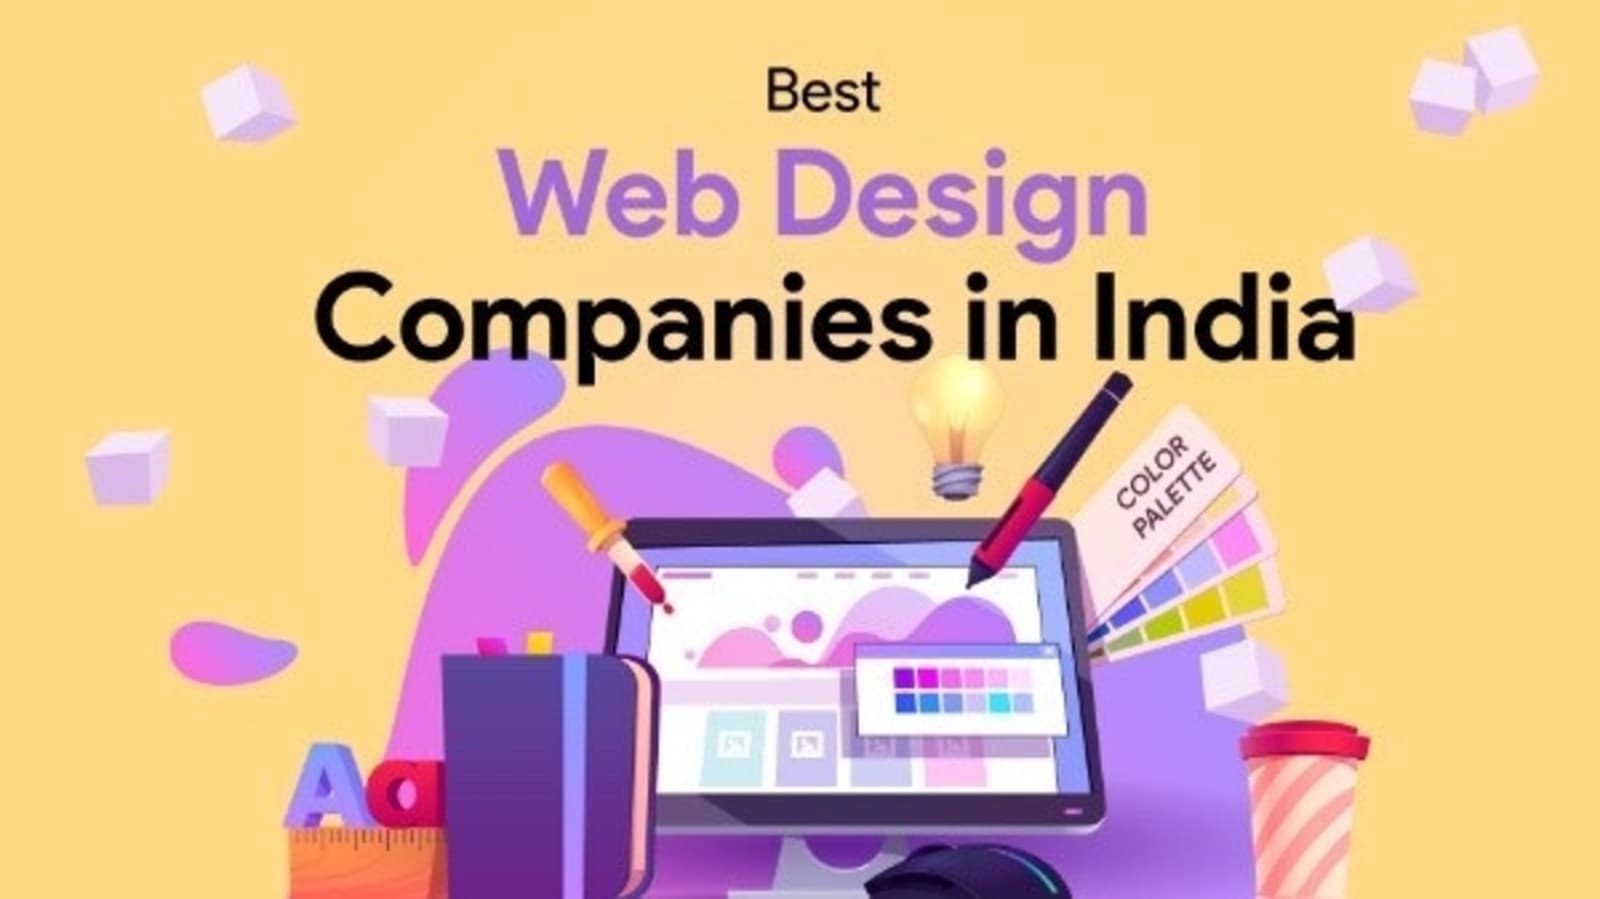 9 Best Web Design Companies in India